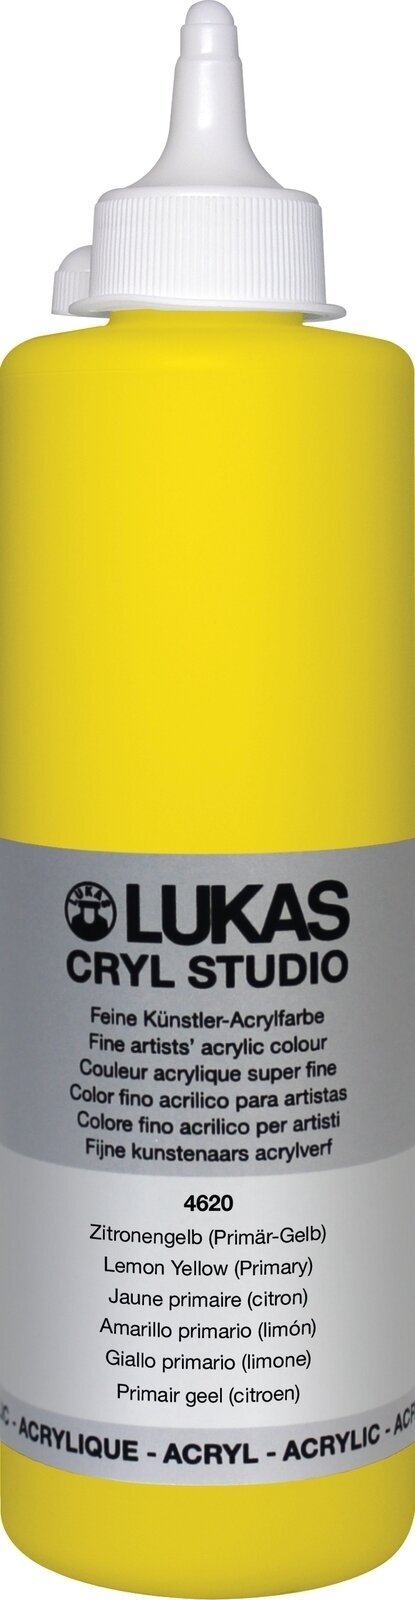 Levně Lukas Cryl Studio Akrylová barva 500 ml Lemon Yellow (Primary)